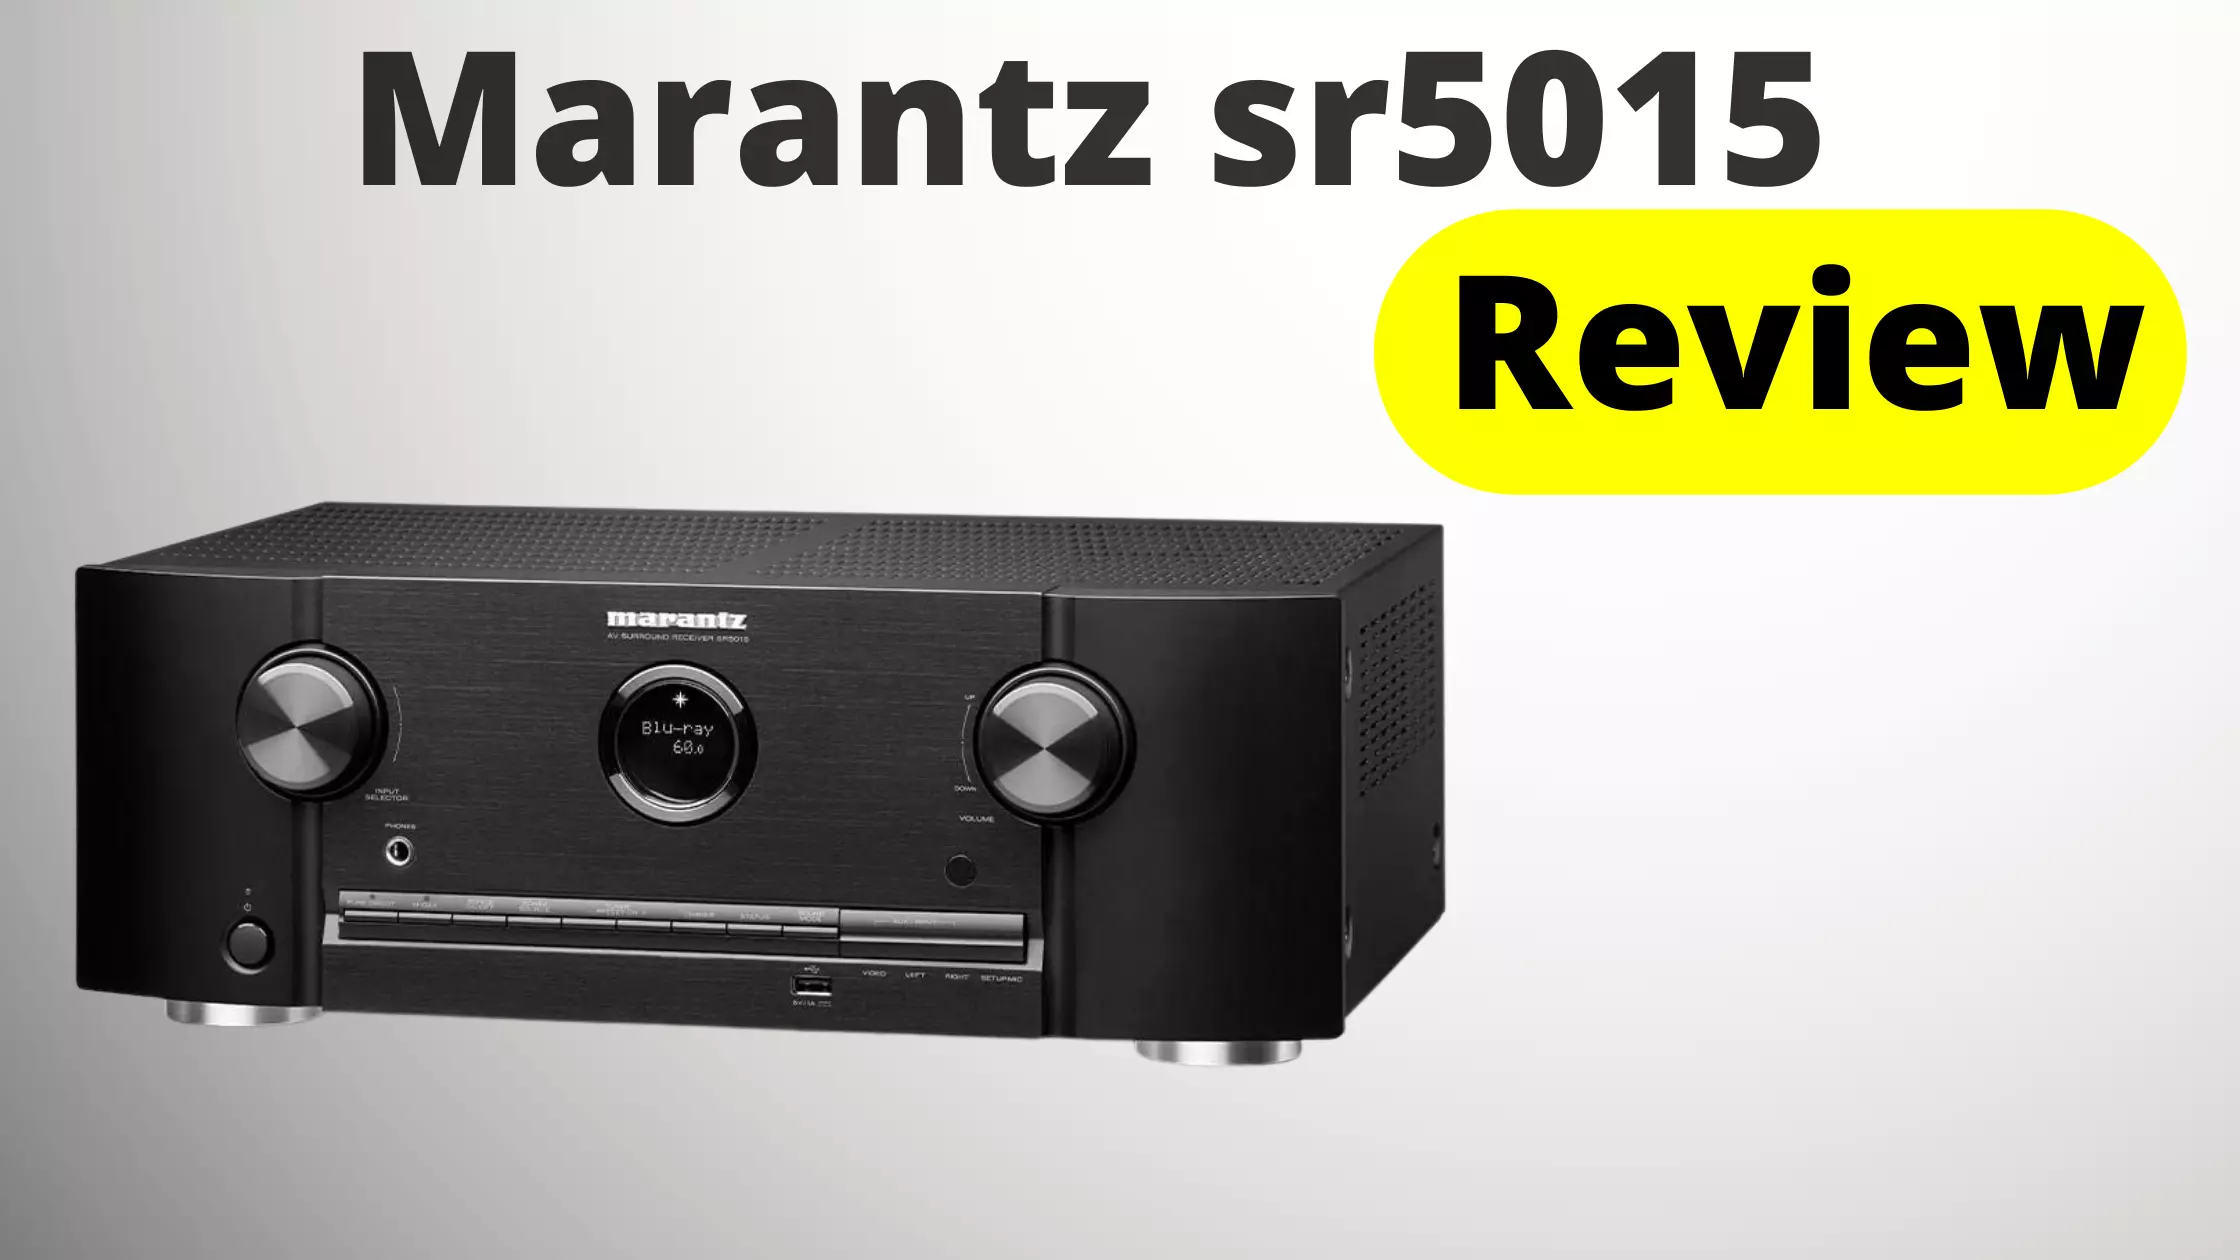 Marantz Sr5015 Review - Experts Reviewed